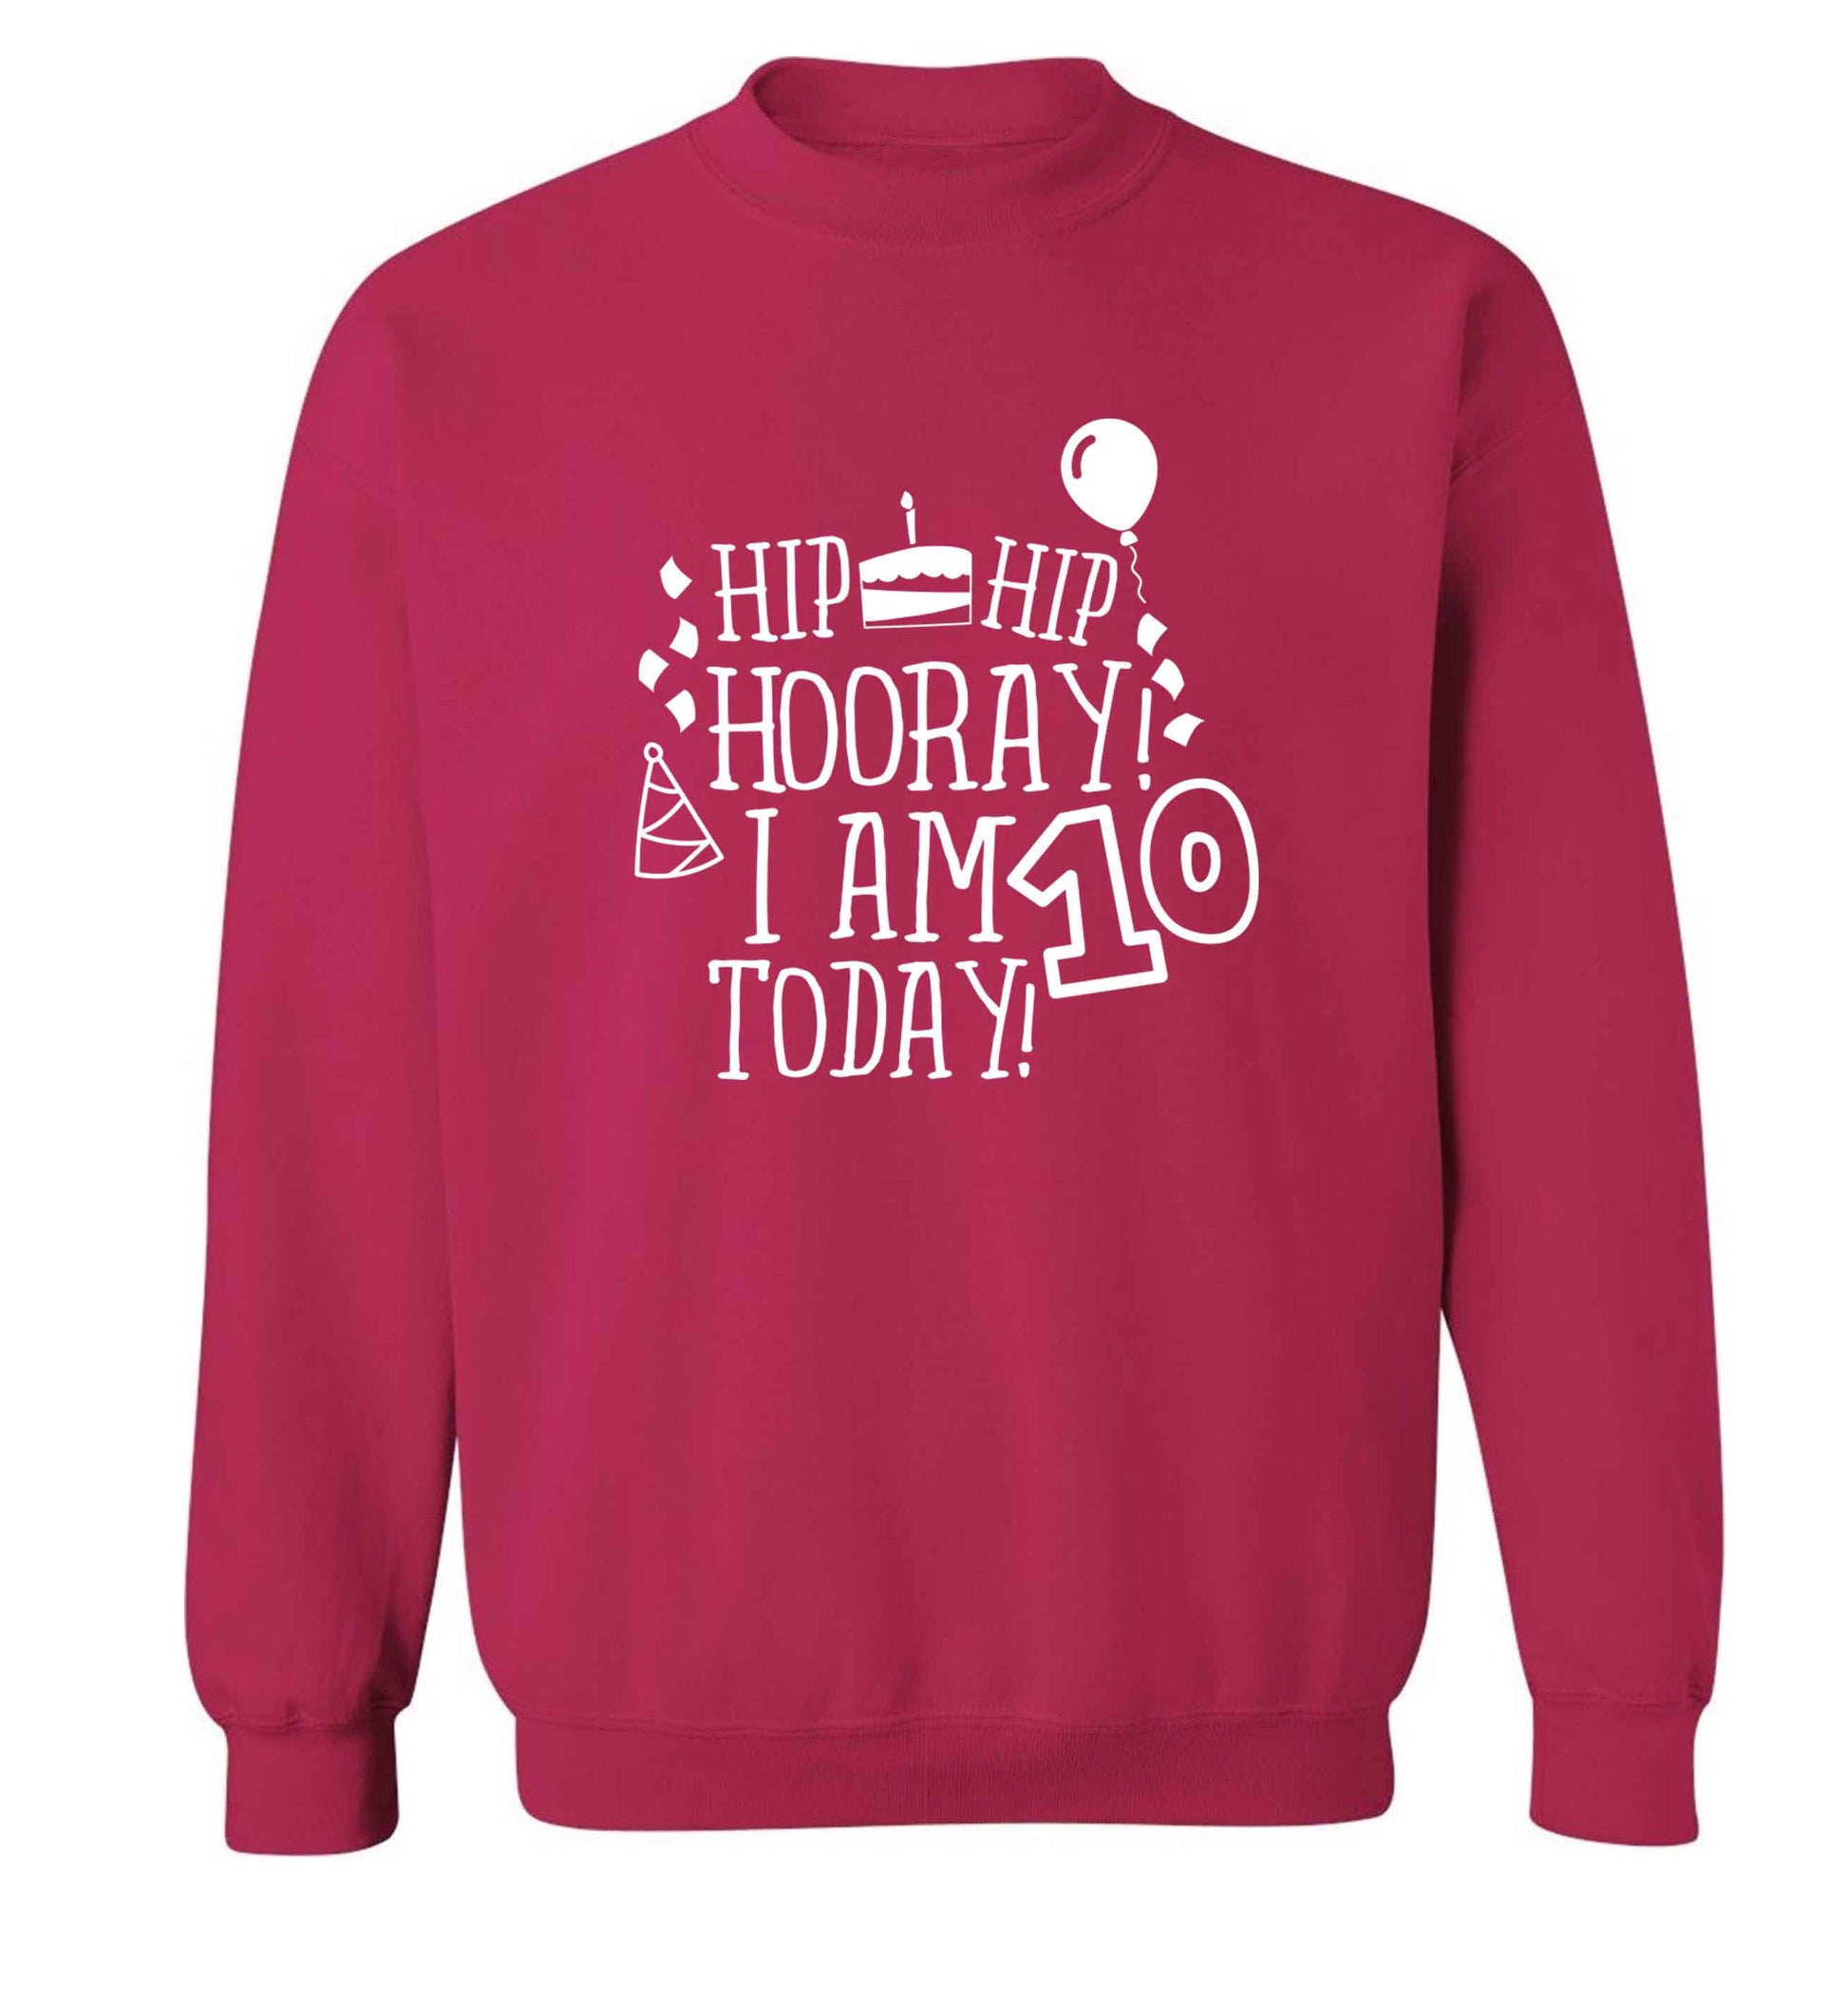 Hip hip hooray I am ten today! adult's unisex pink sweater 2XL